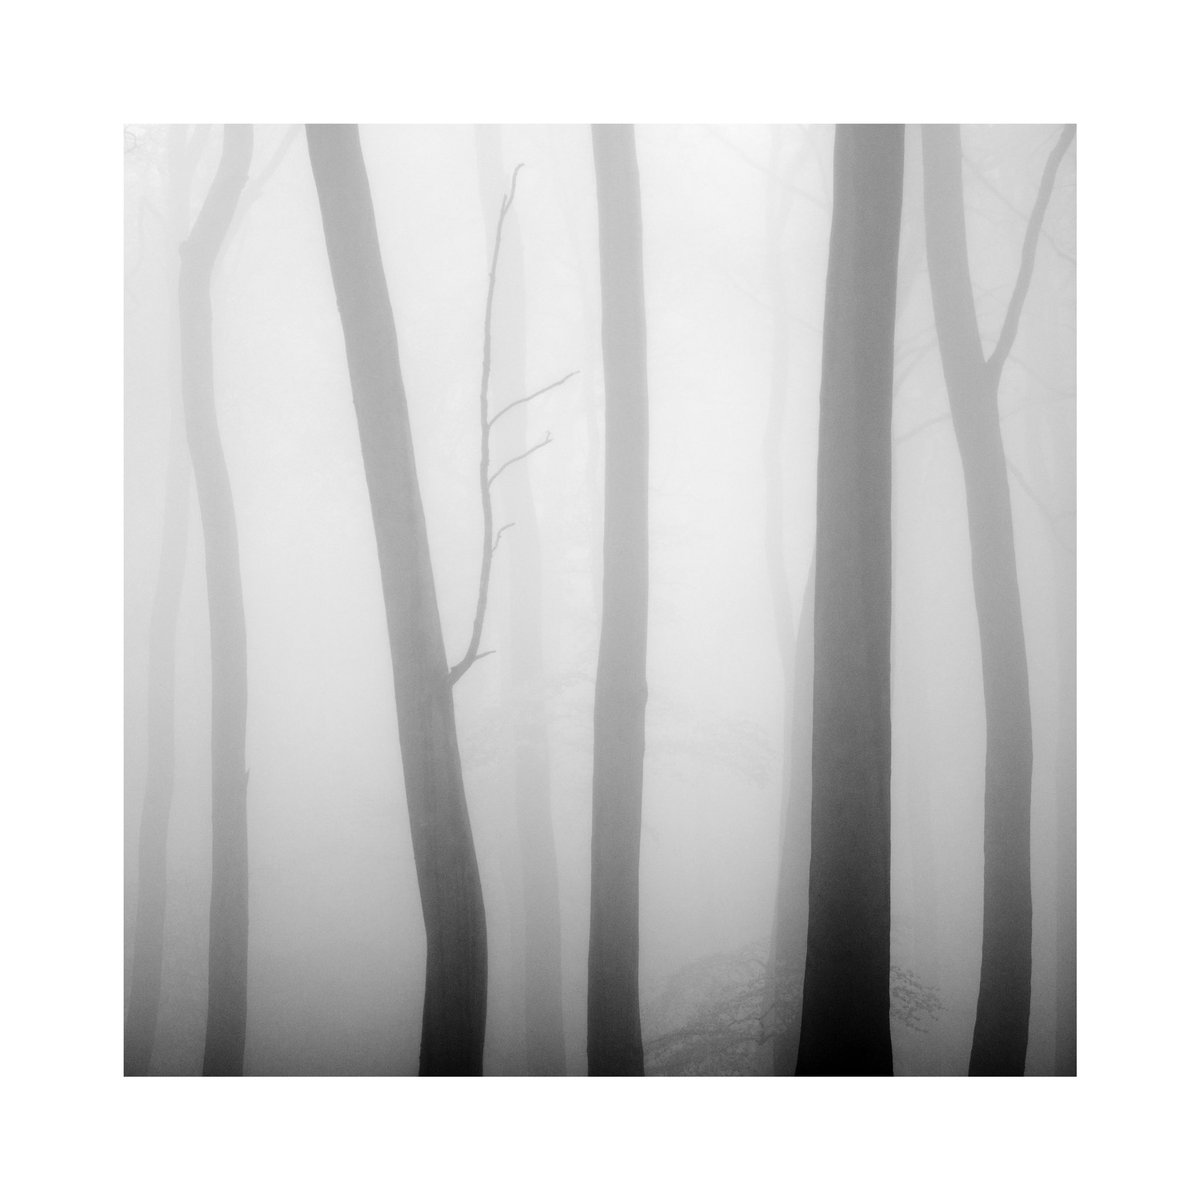 Tree trunks, Oxfordshire. 

#photography #monochrome #bnw